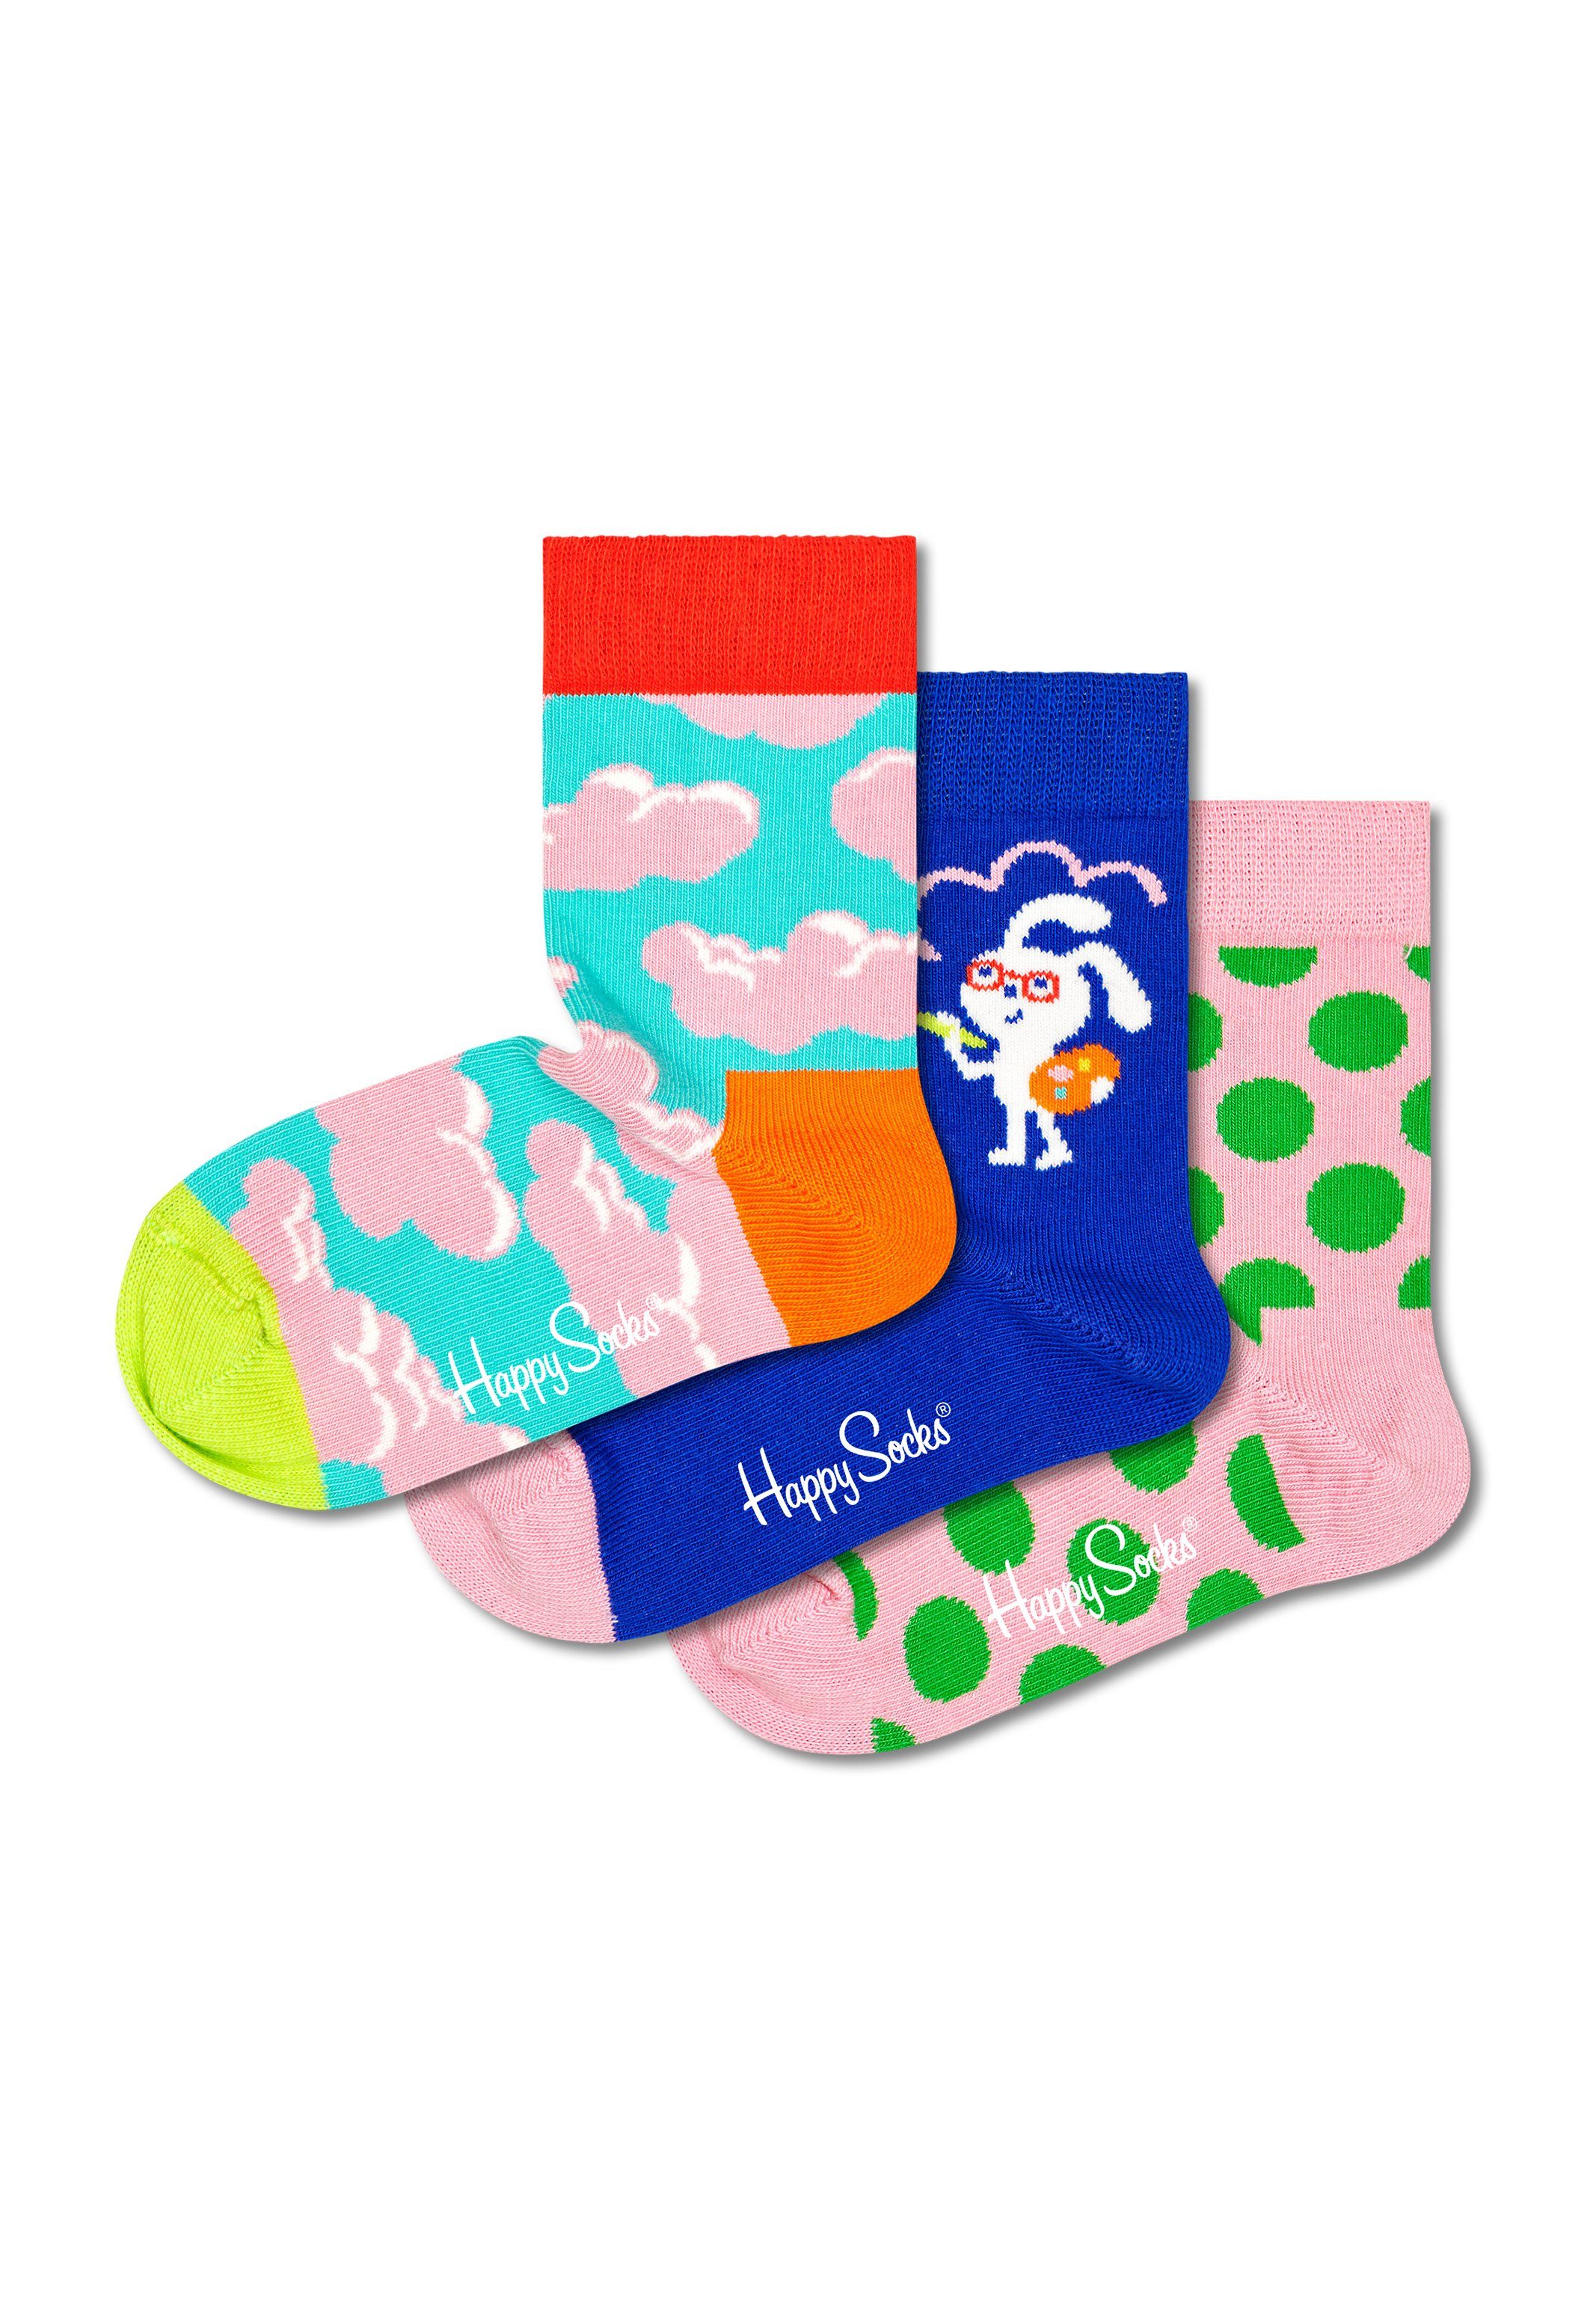 Happy Socks Langsocken Kids Socken - Geschenk Rainbow Geschenkbox, Over - The und in einer 3 unterschiedliche Paar Baumwolle Jedes zeigt Box 3-Paar) (Spar-Set, 3 Farben Paar Paar Socken Muster bunte